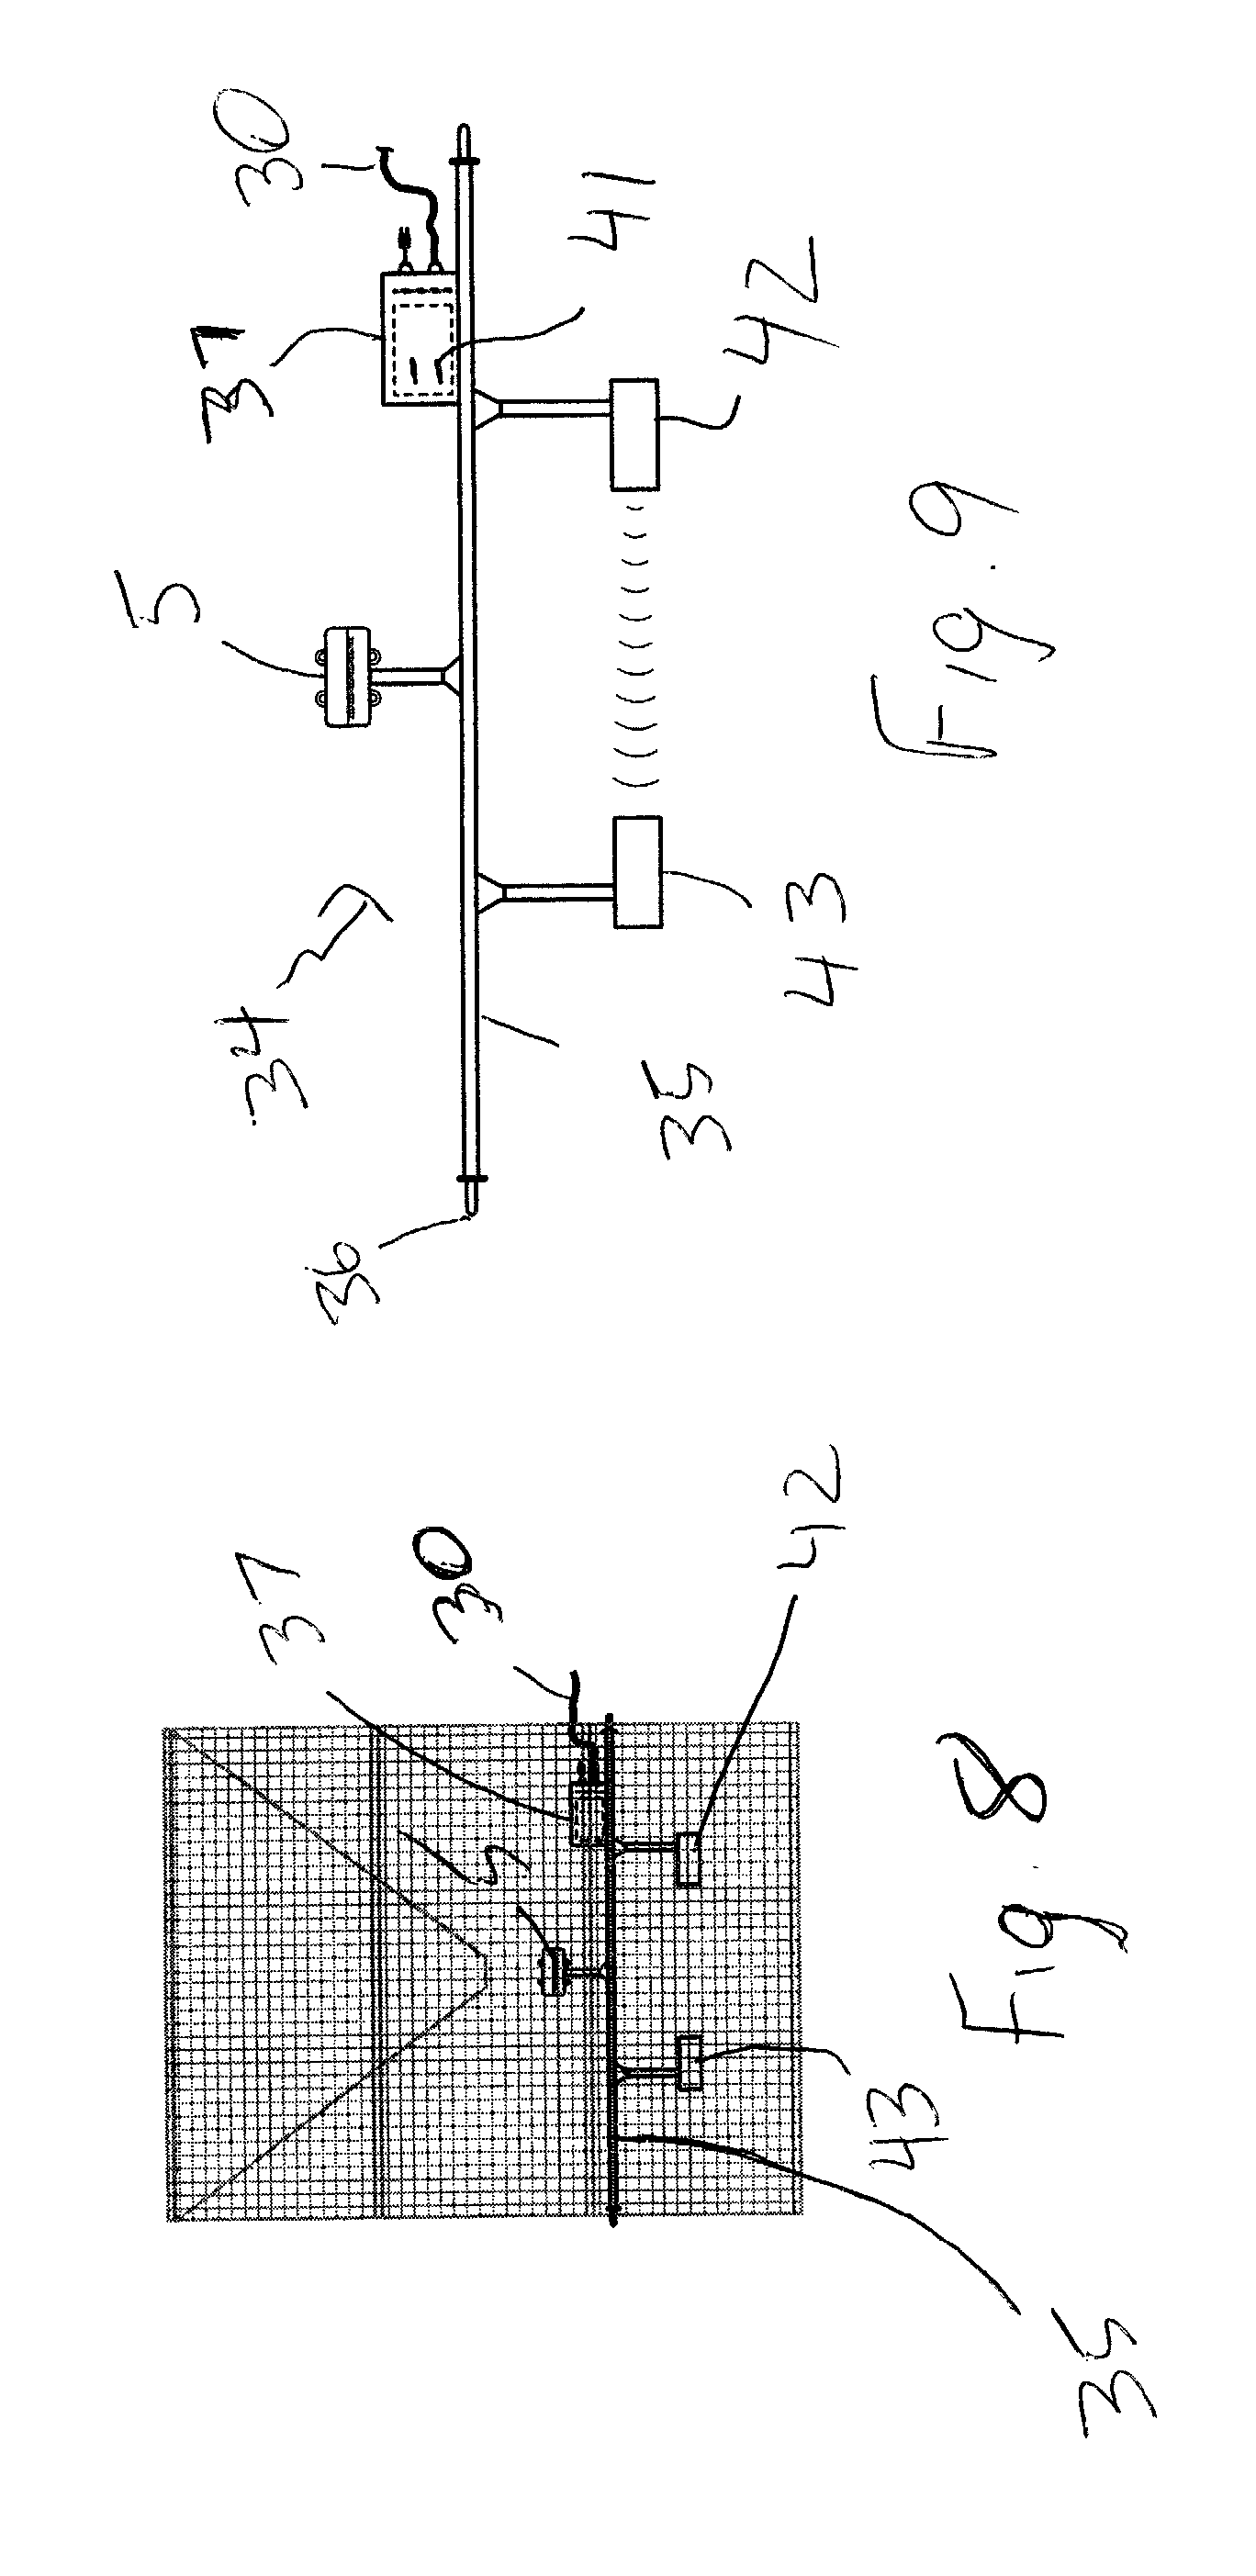 Bait-fish trap